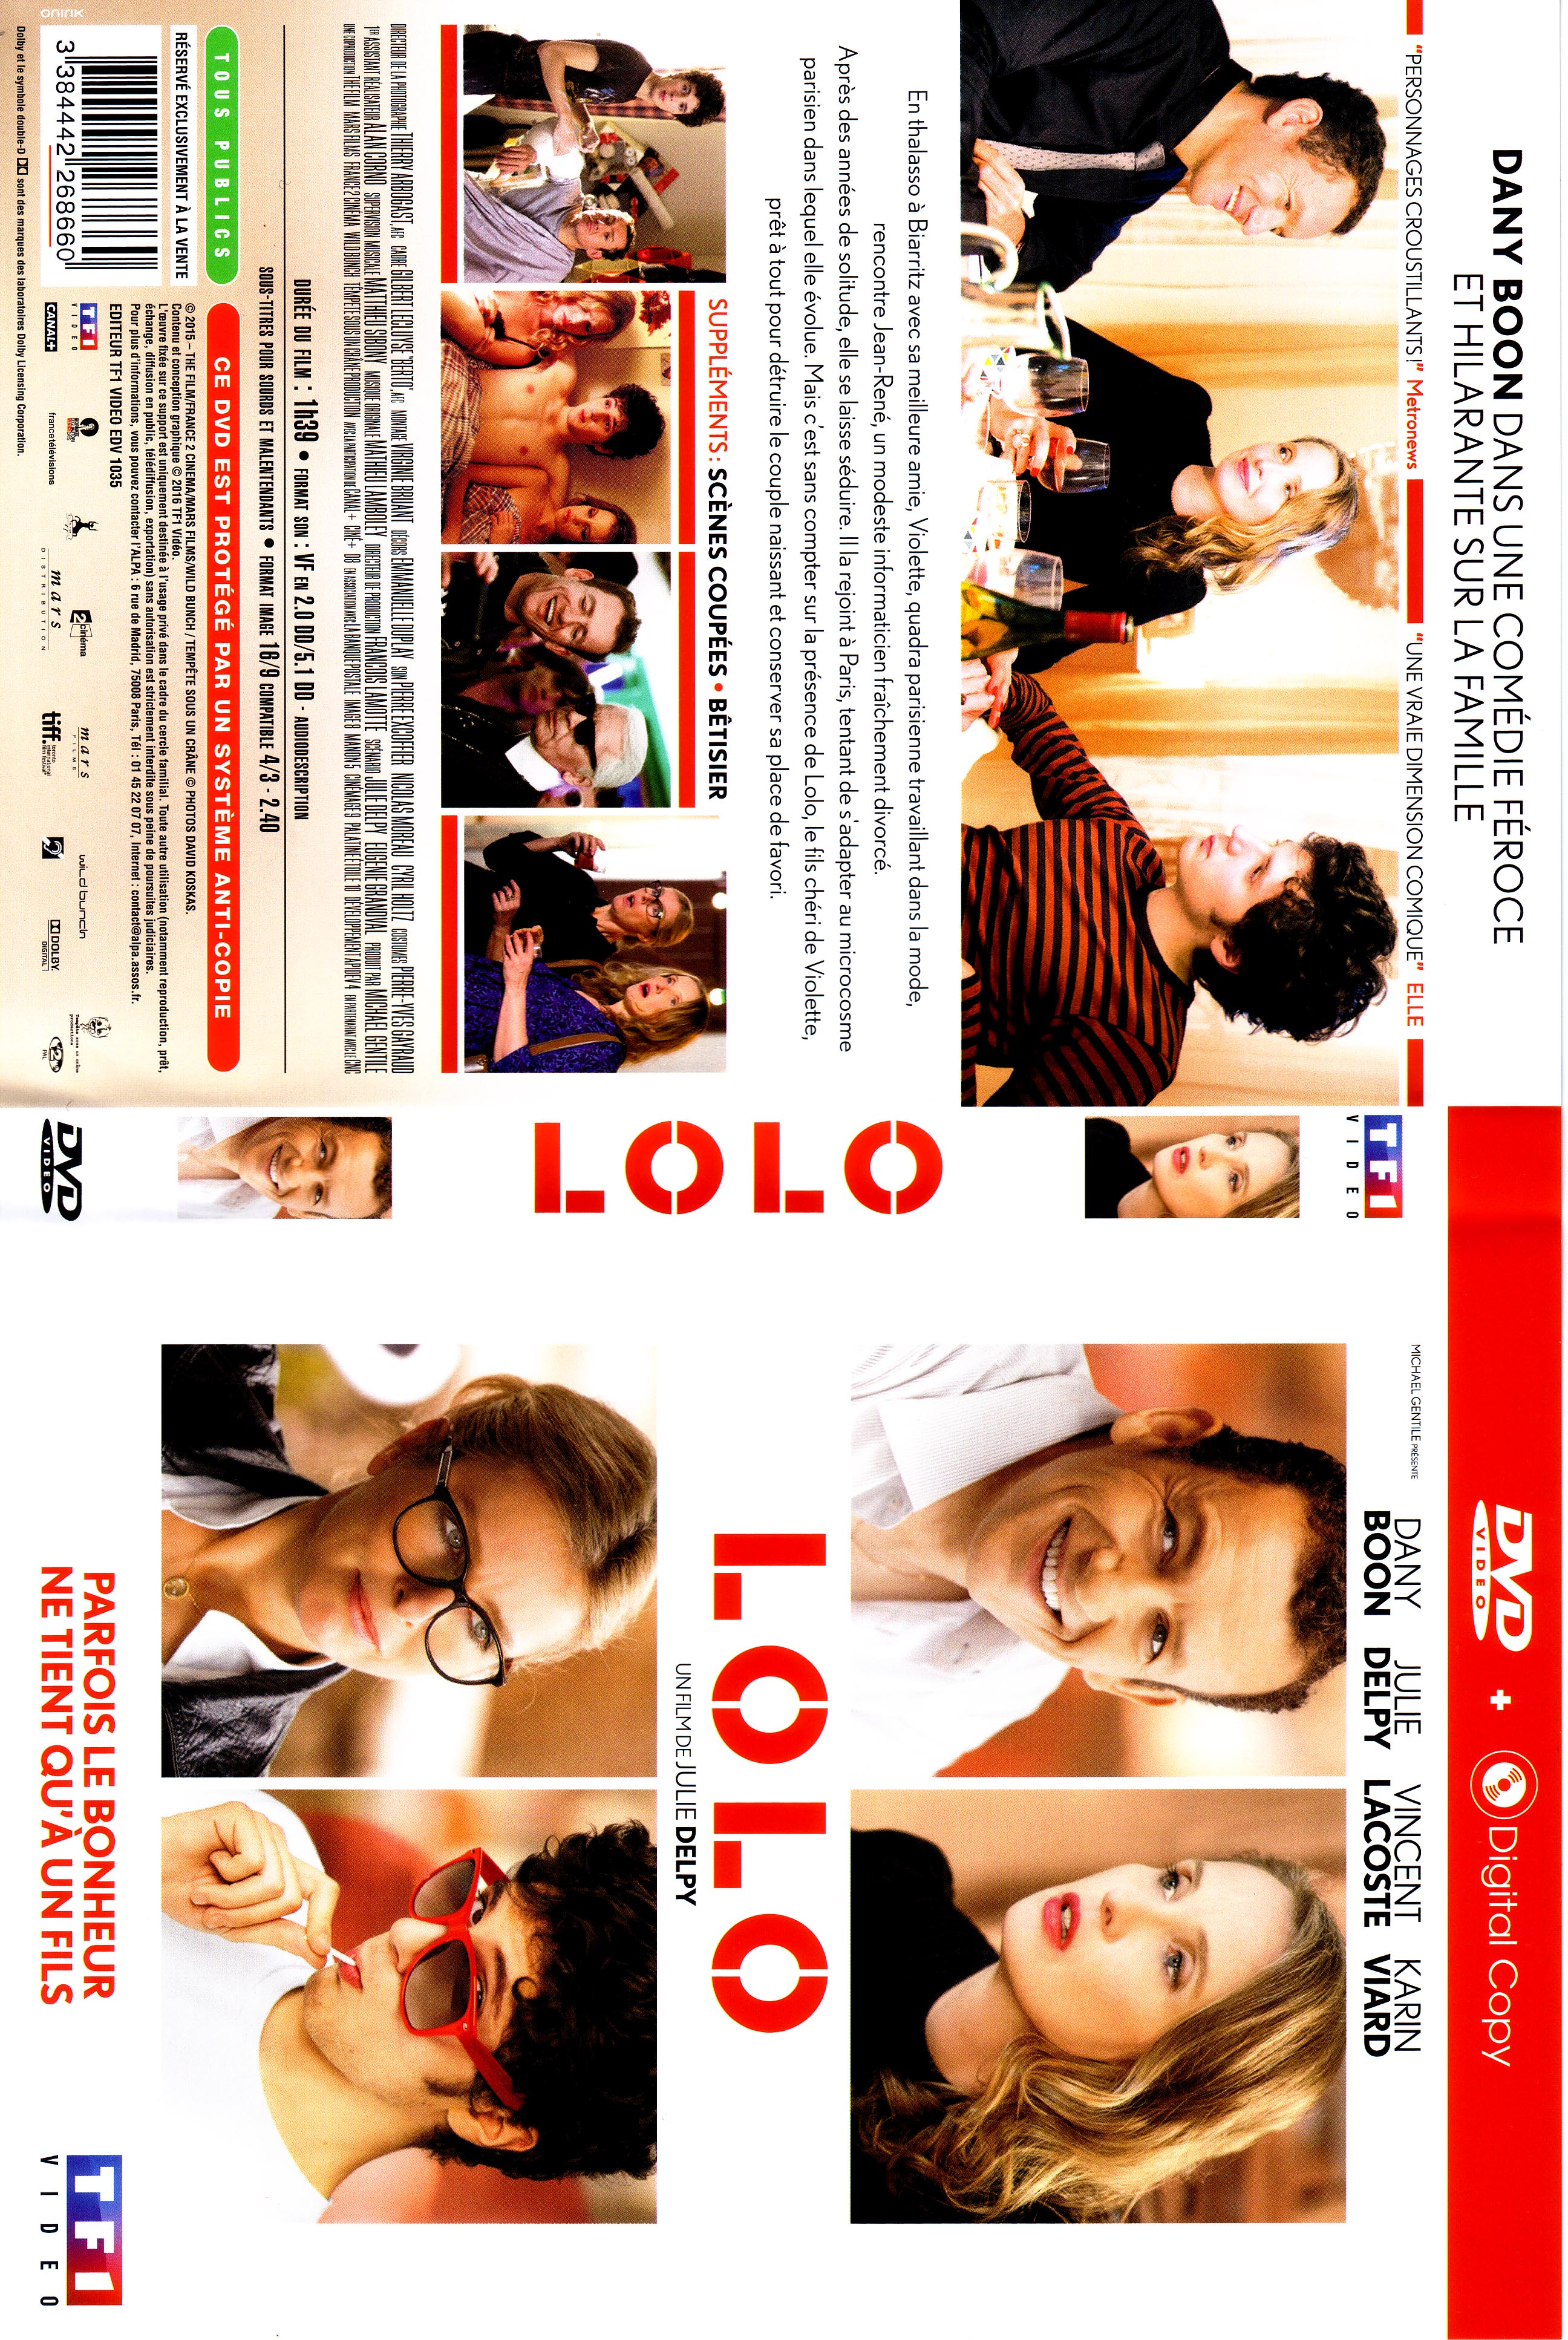 Jaquette DVD Lolo